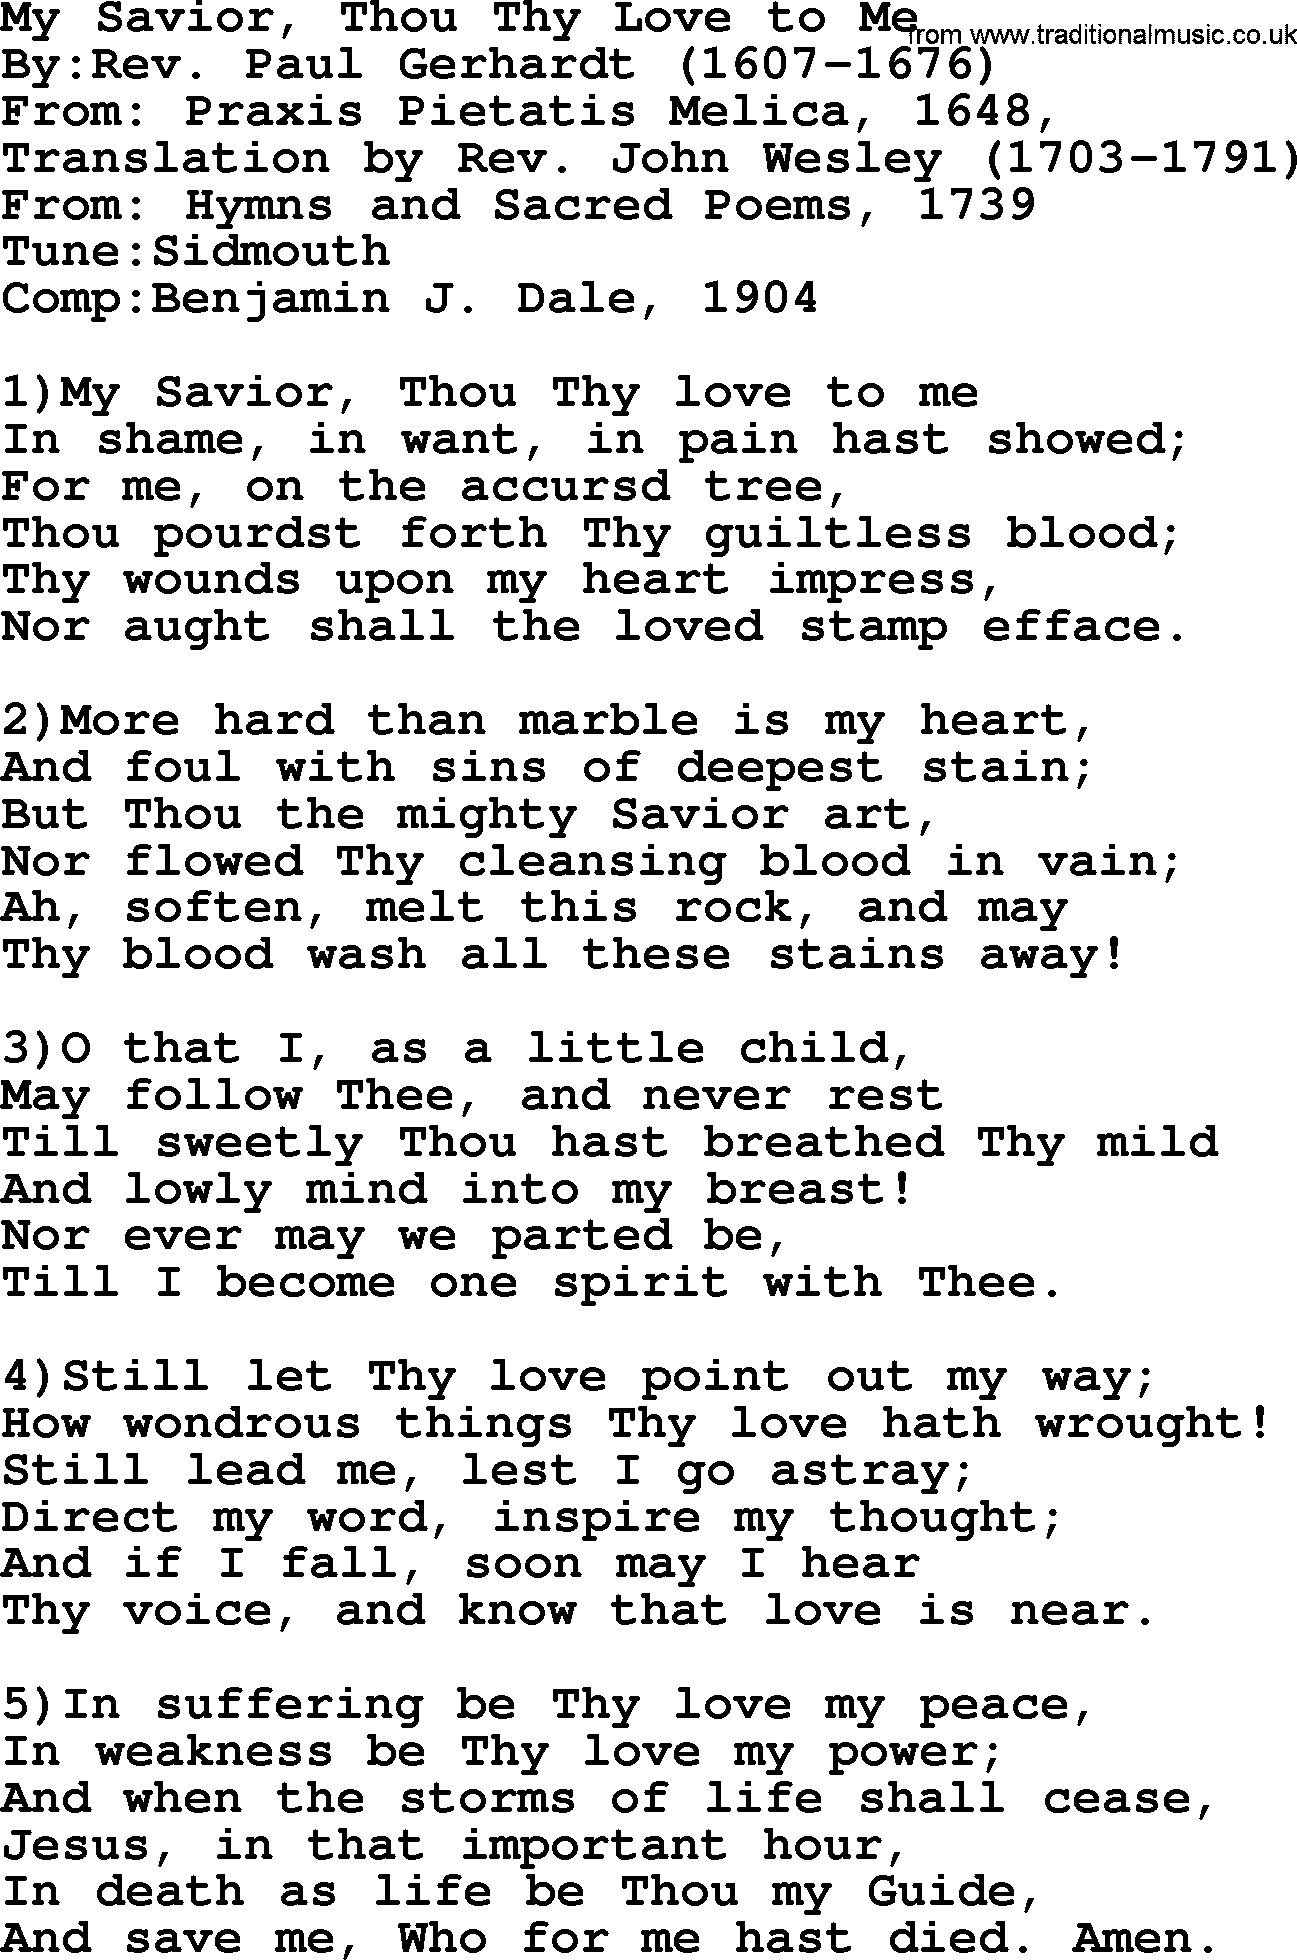 Methodist Hymn: My Savior, Thou Thy Love To Me, lyrics